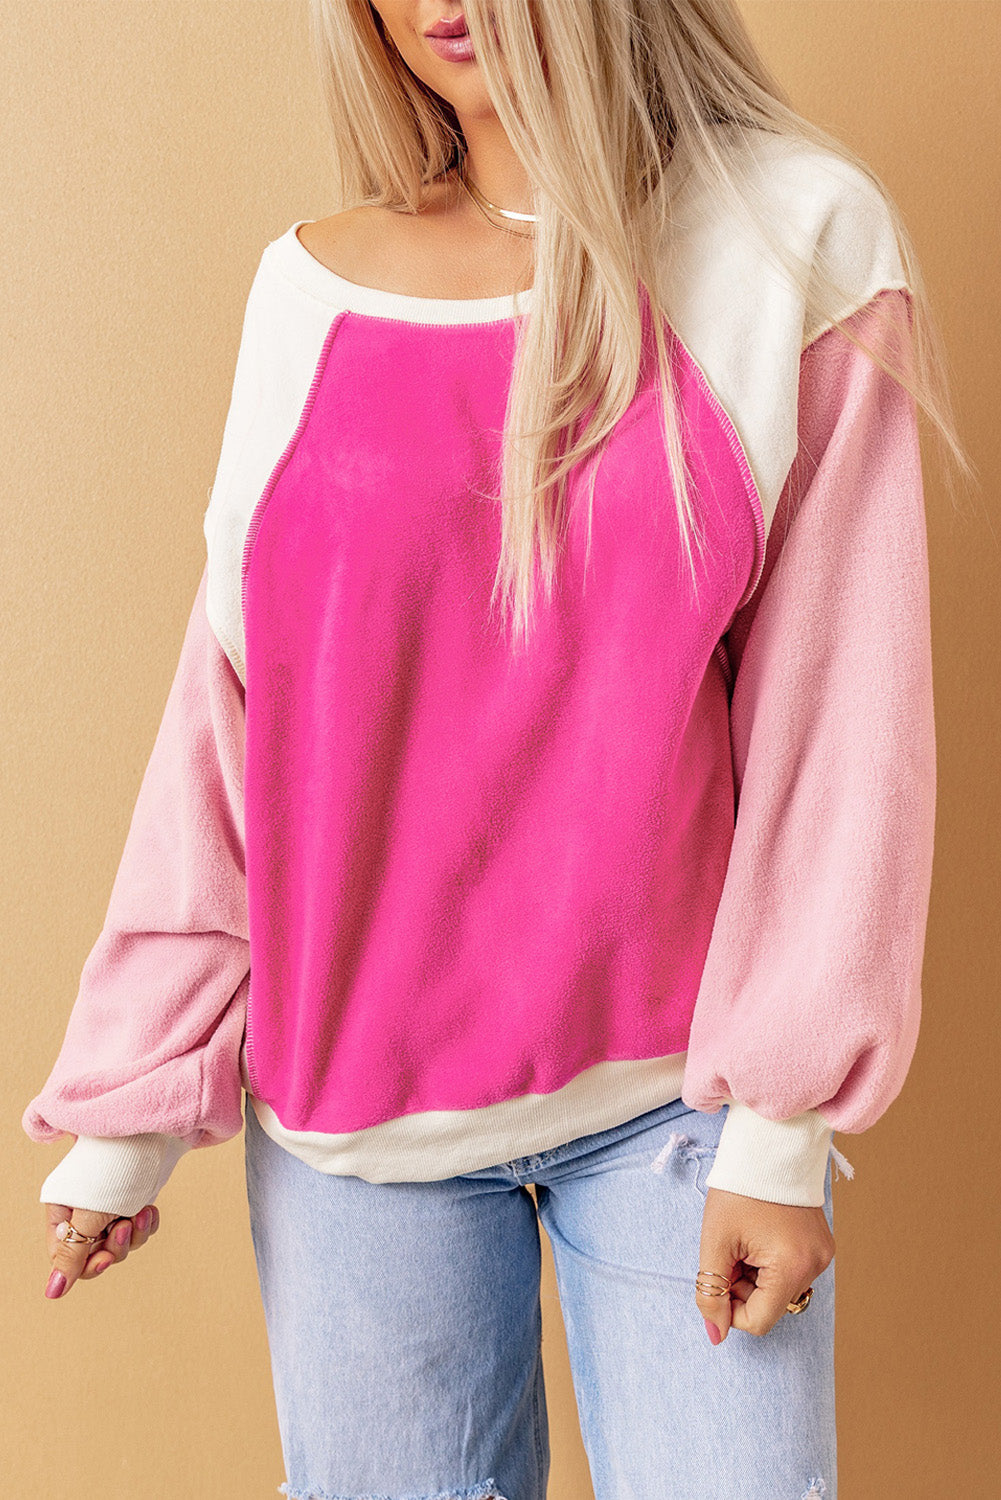 The Rose Colorblock Sweatshirt